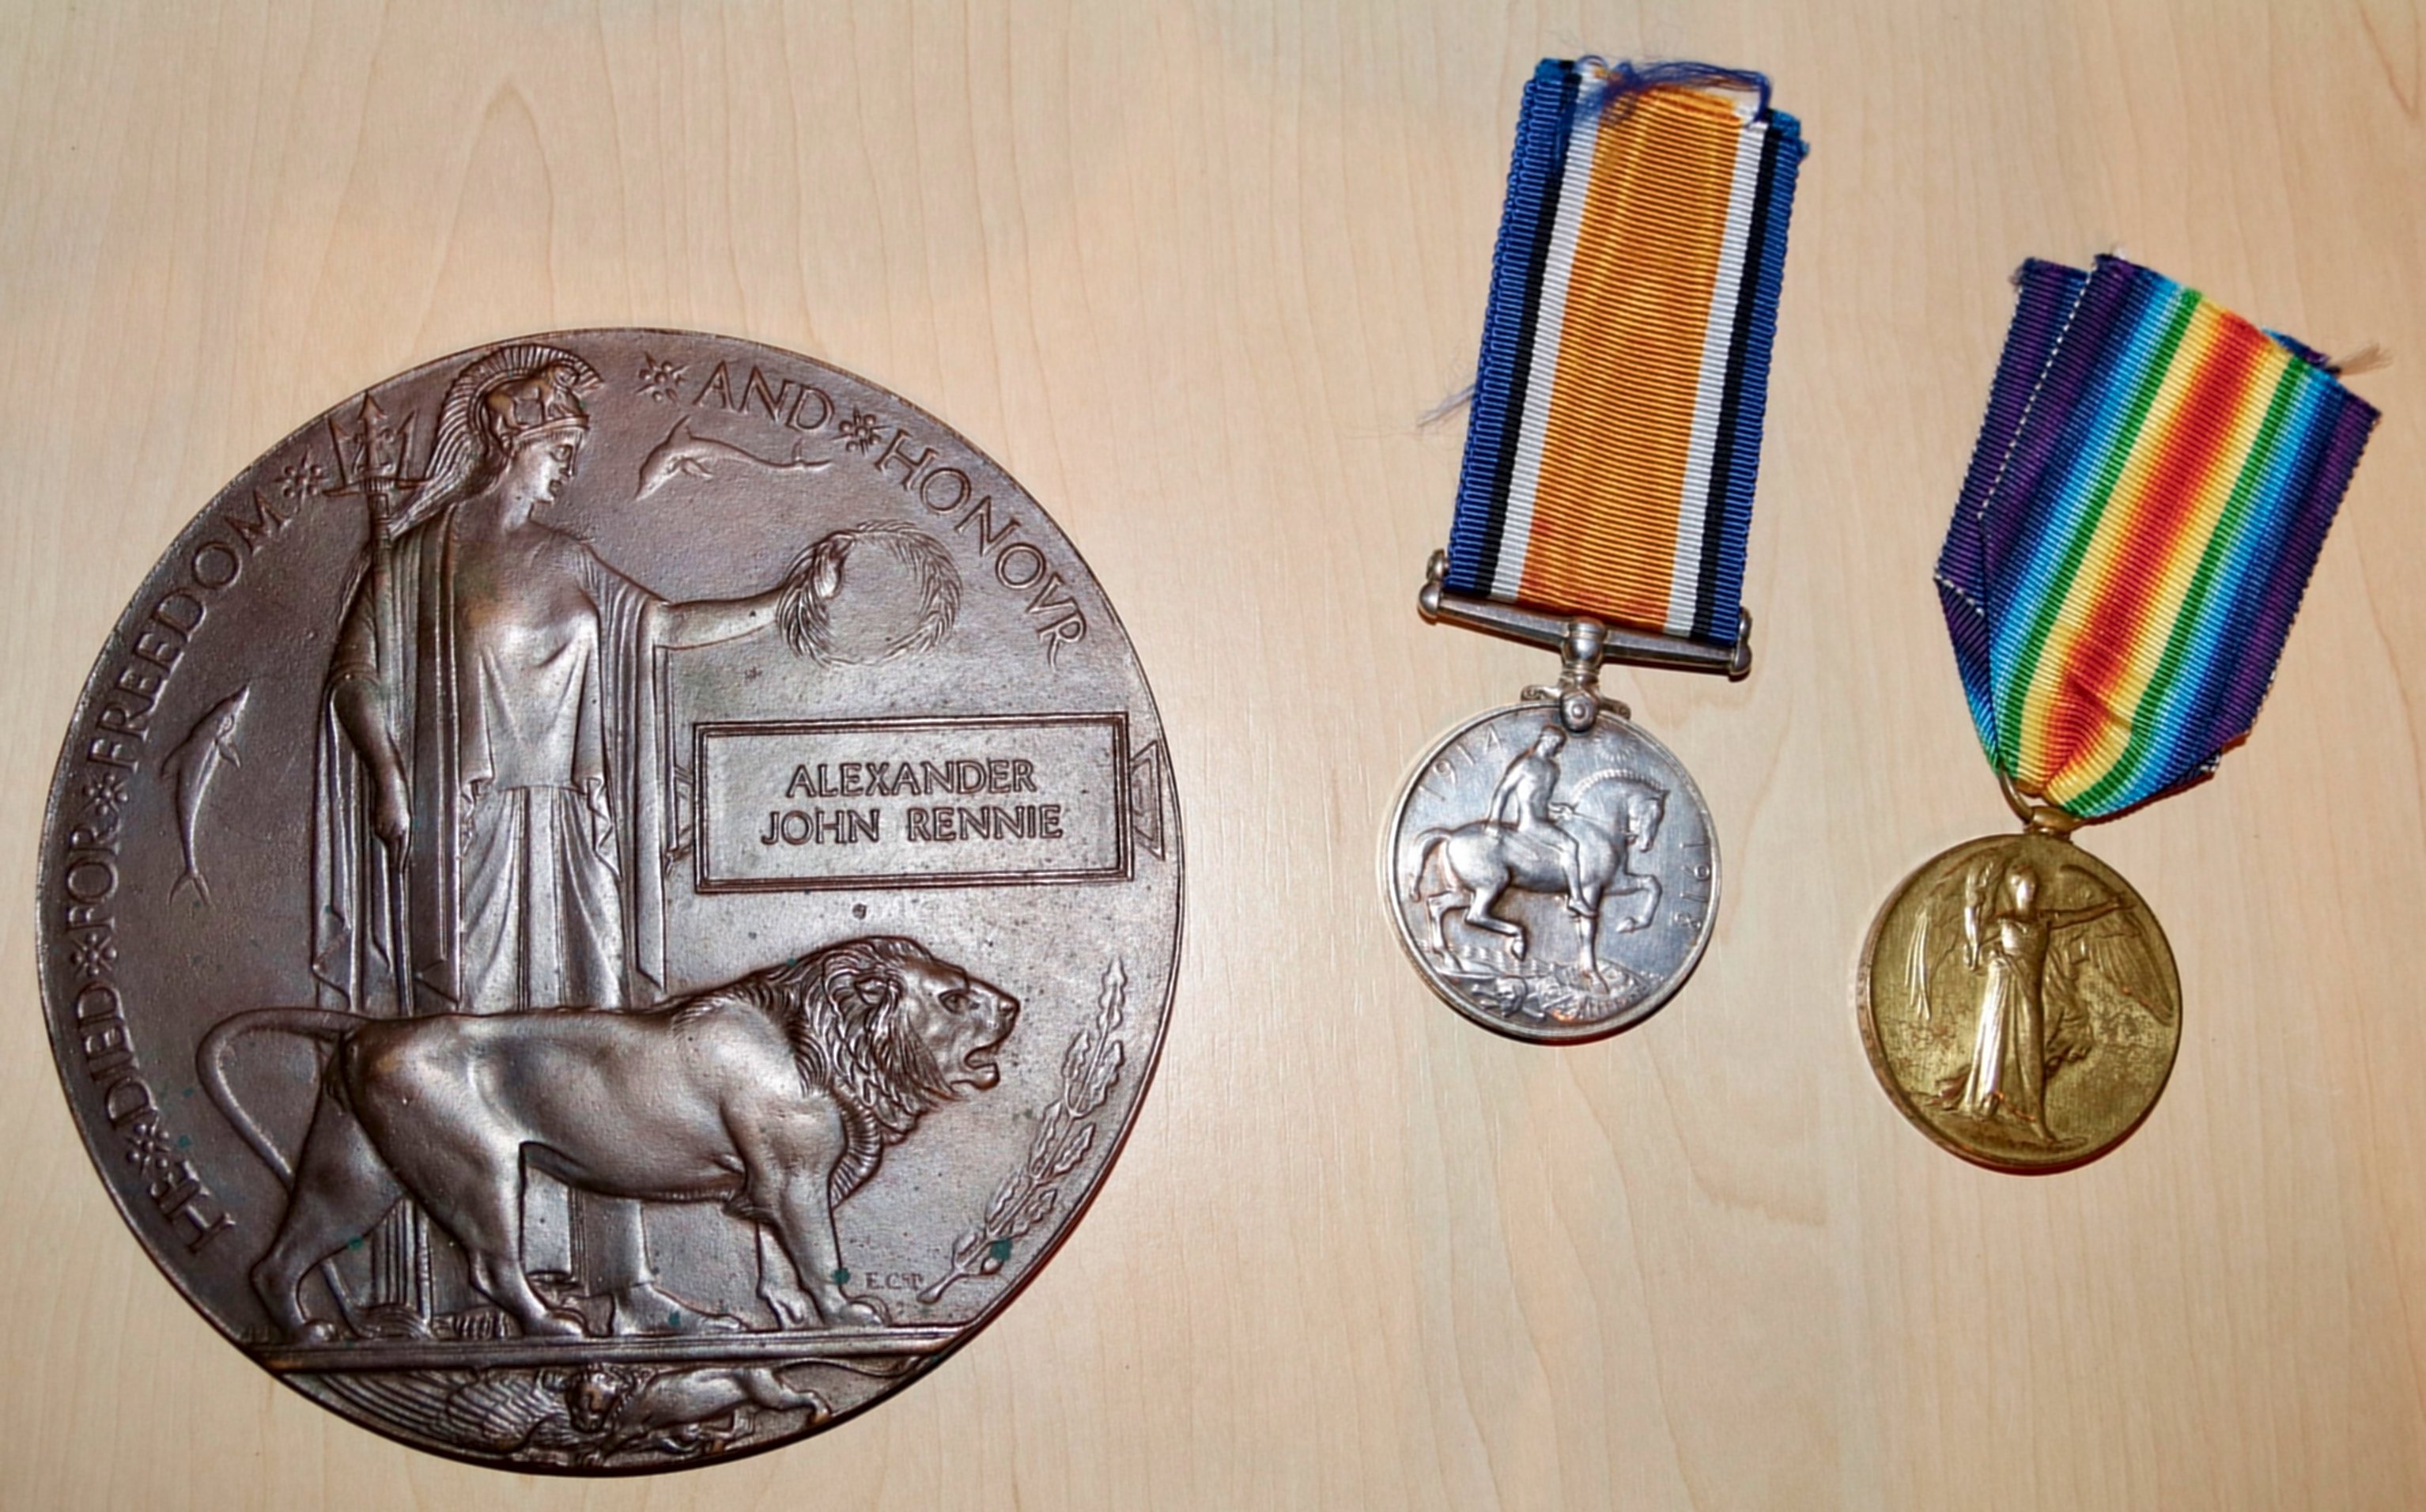 [Alexander Rennie's memorial plaque and medals]